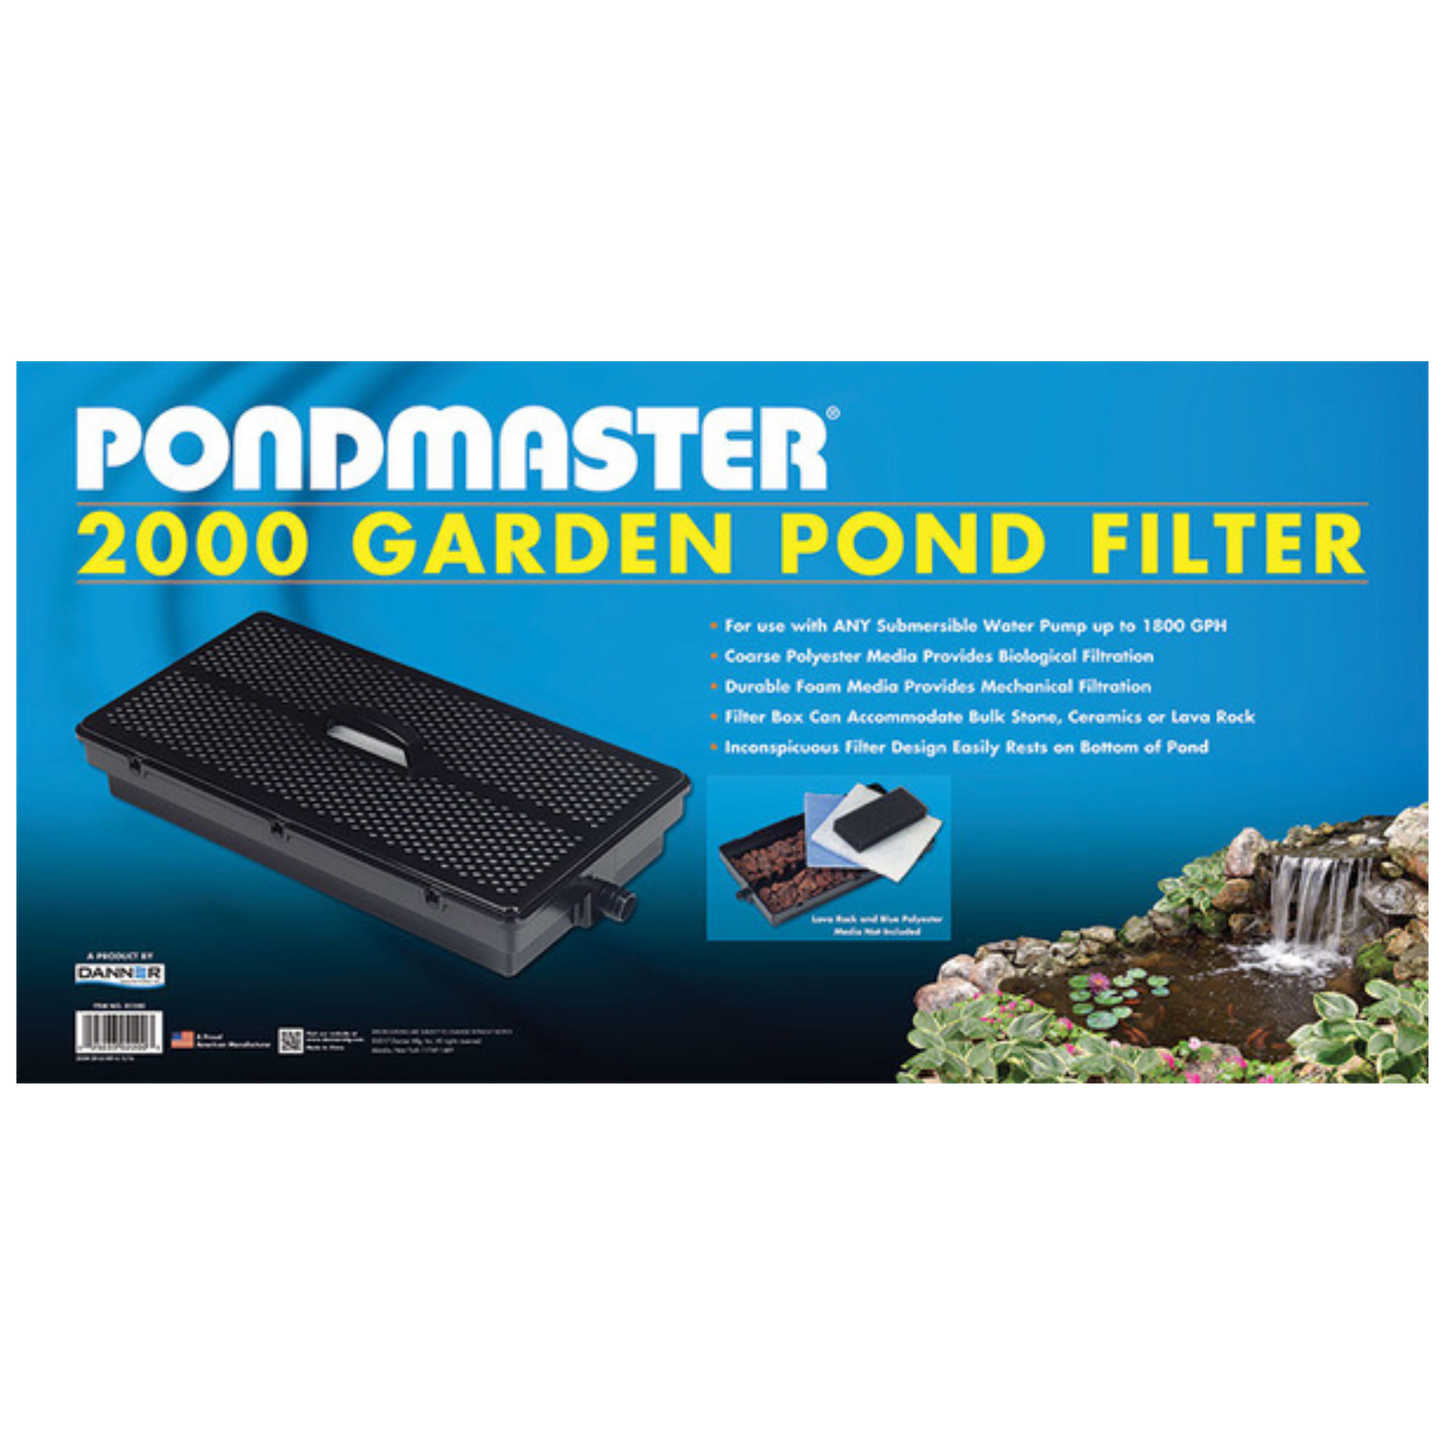 Pondmaster 2000 Garden Pond Filter Only